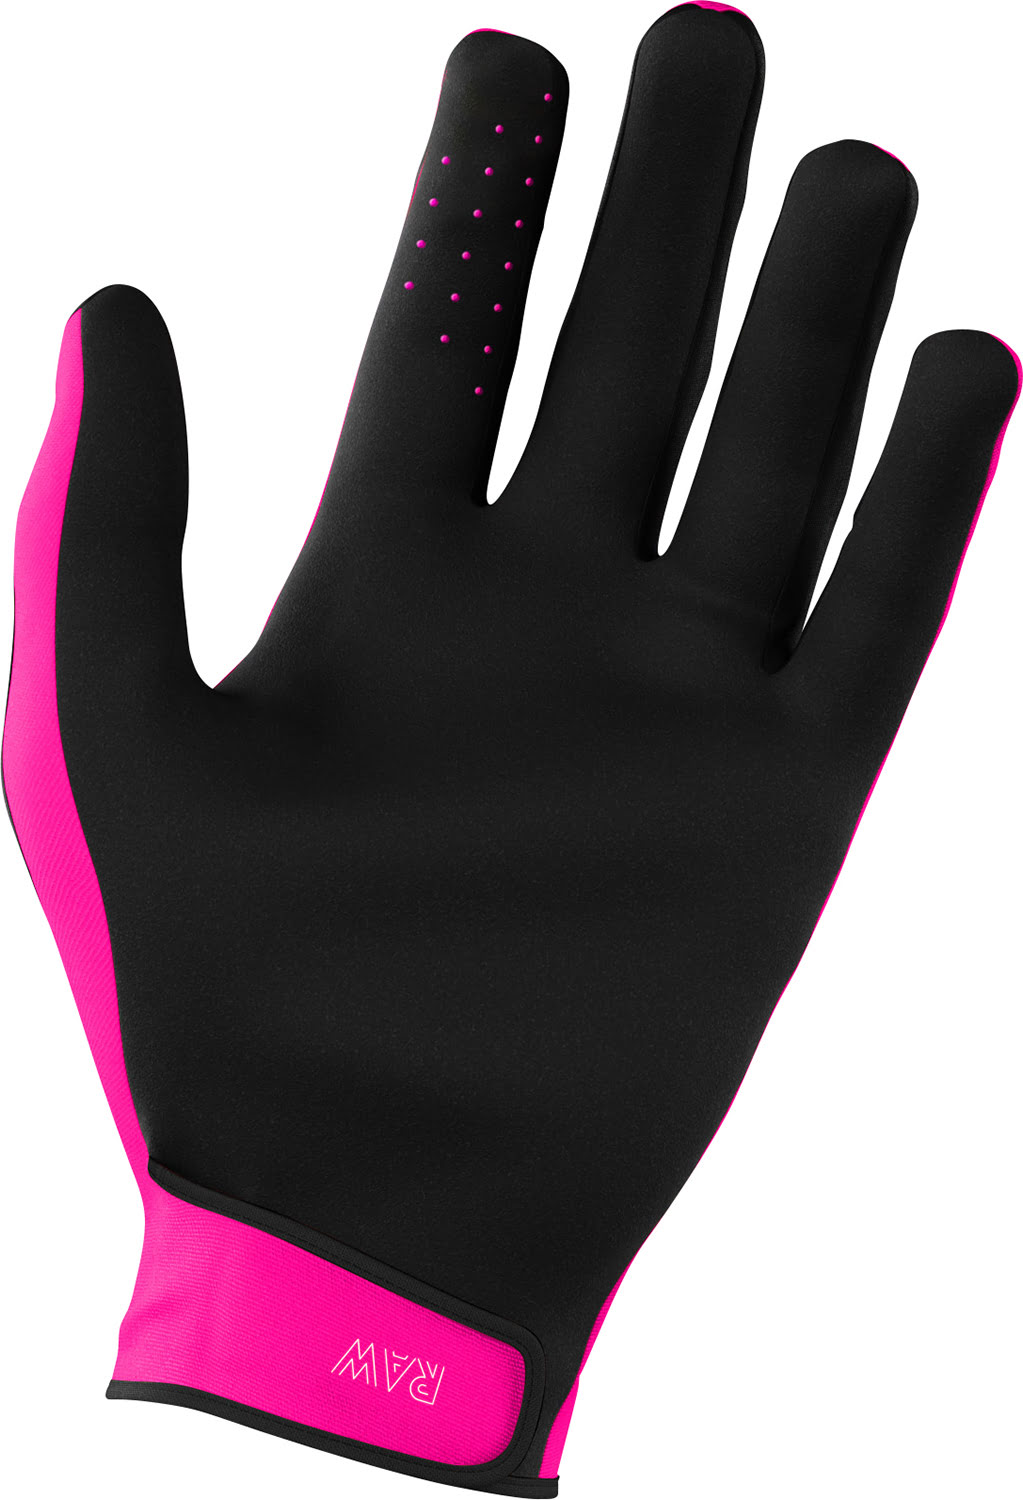 Gloves DRAW Pink SHOT 